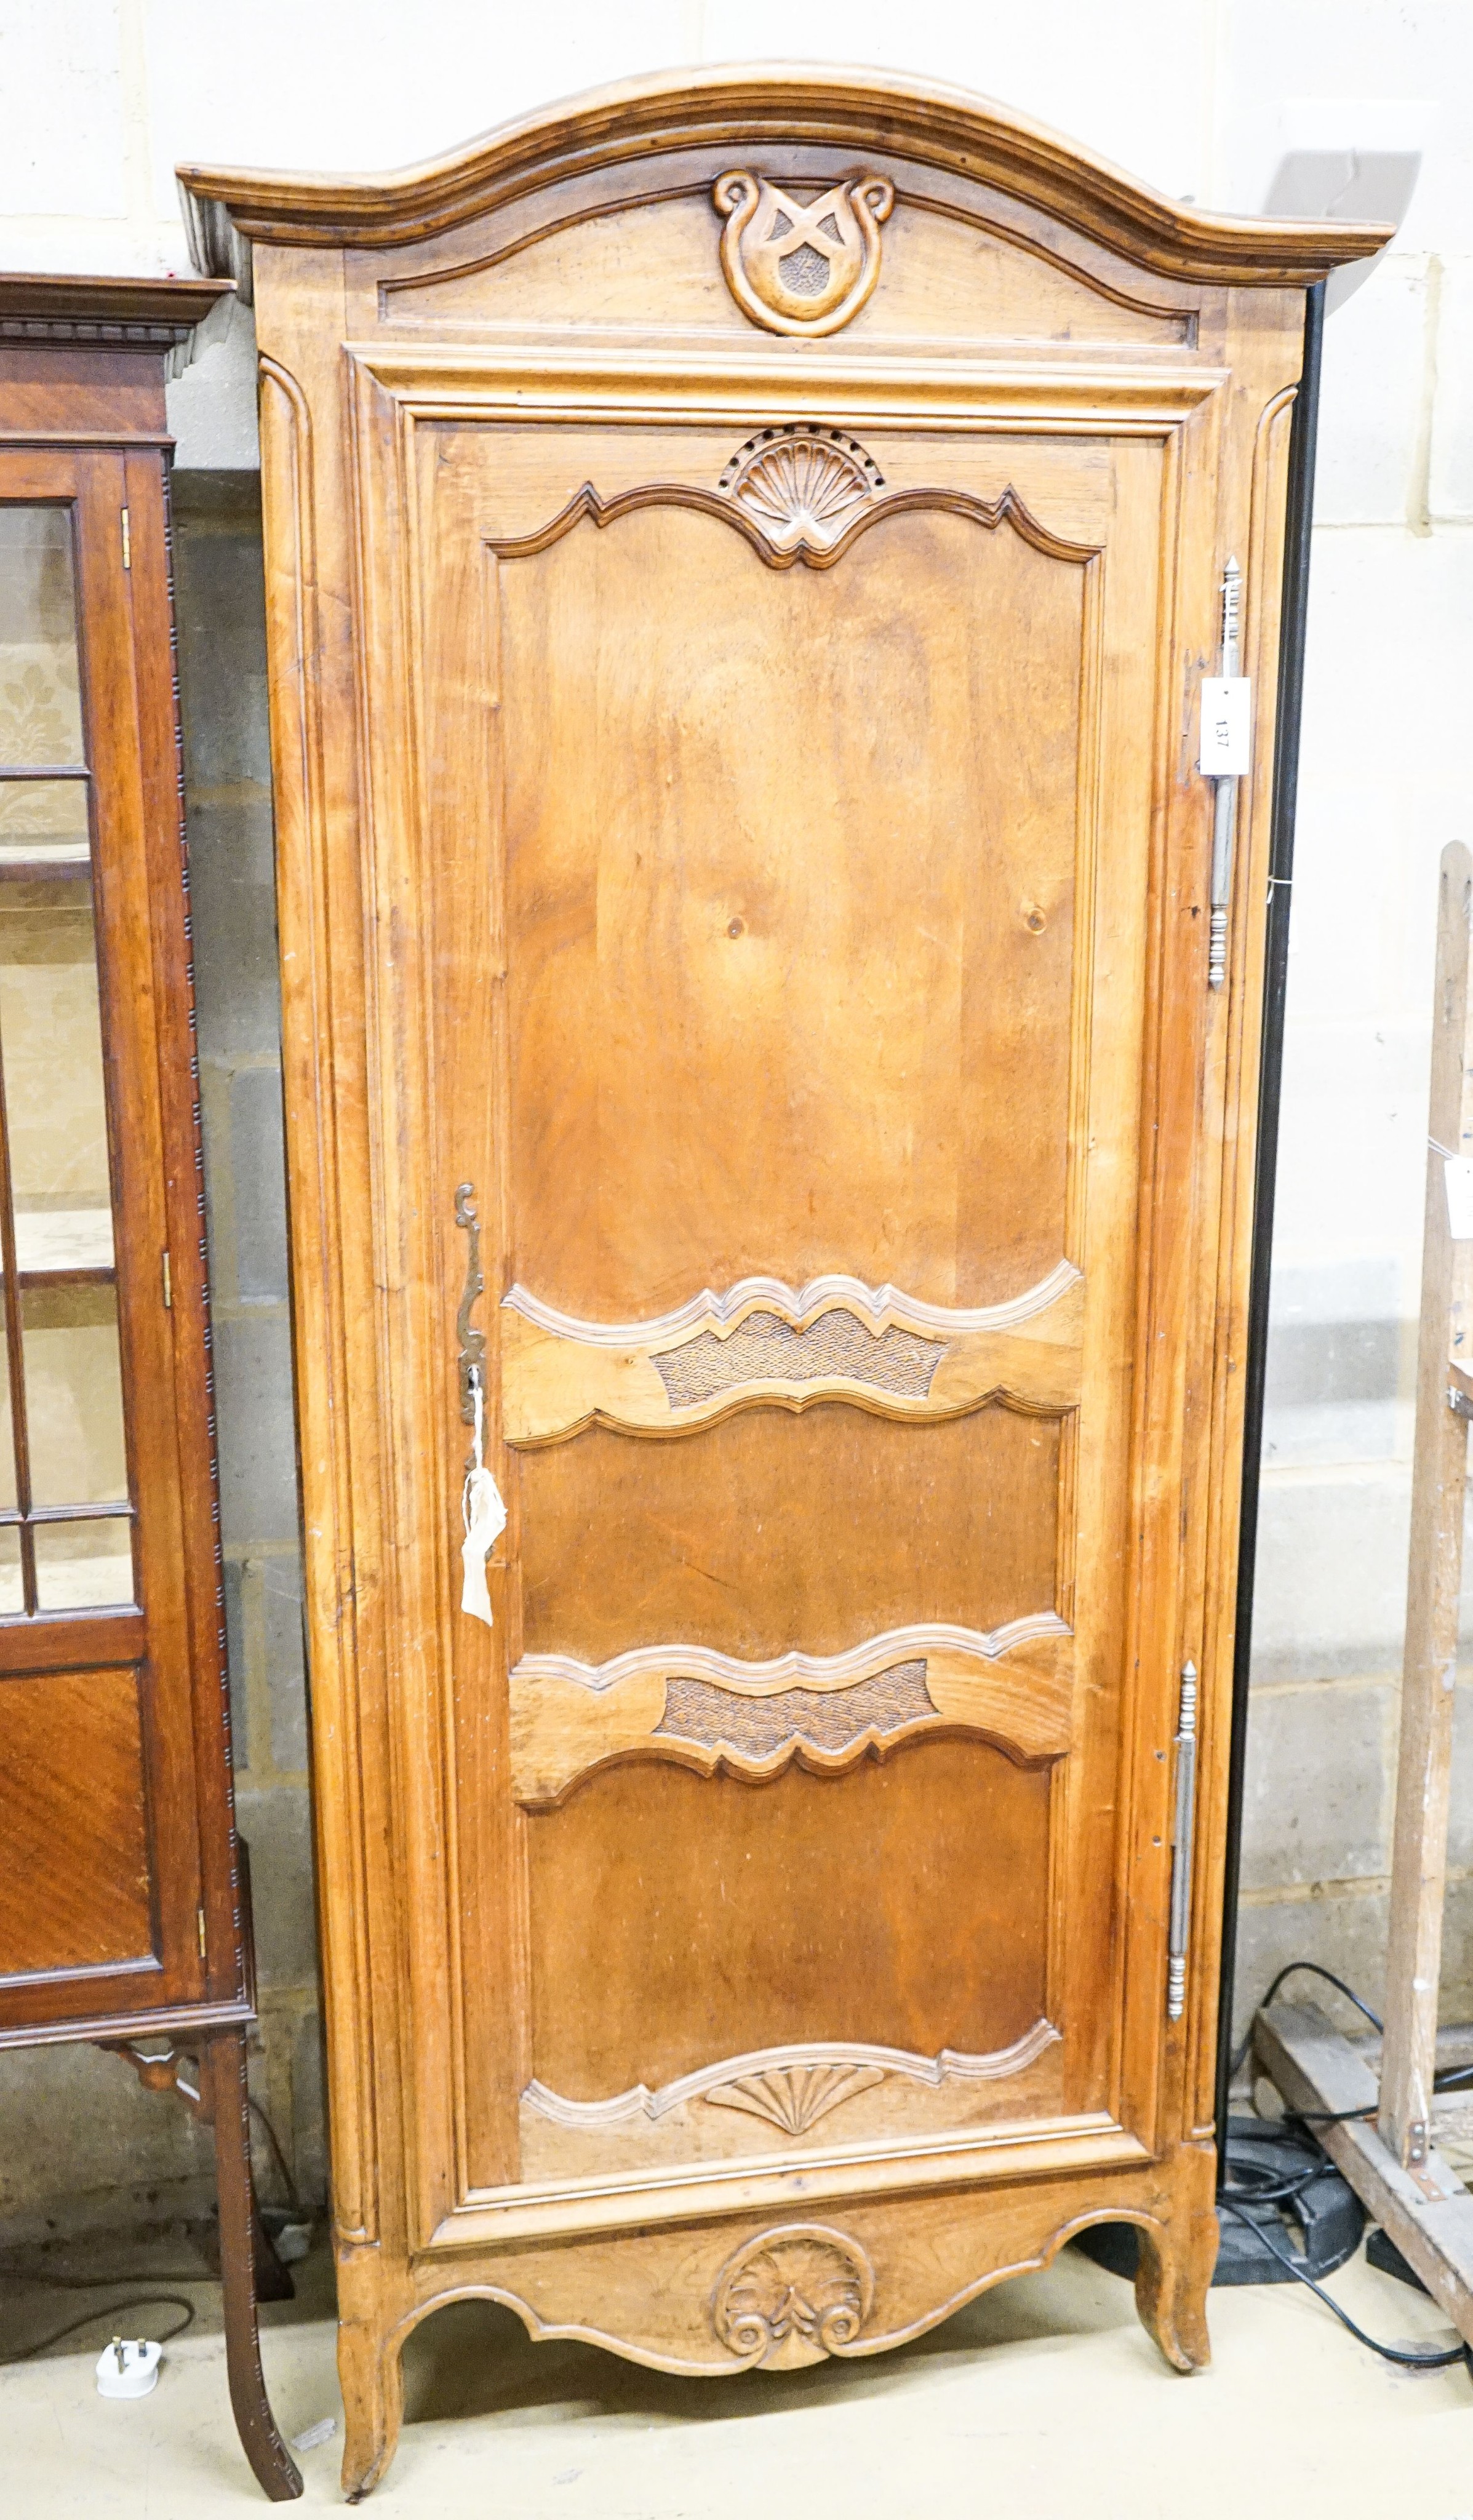 An 18th century style French narrow walnut armoire, width 85cm, depth 48cm, height 188cm                                                                                                                                    